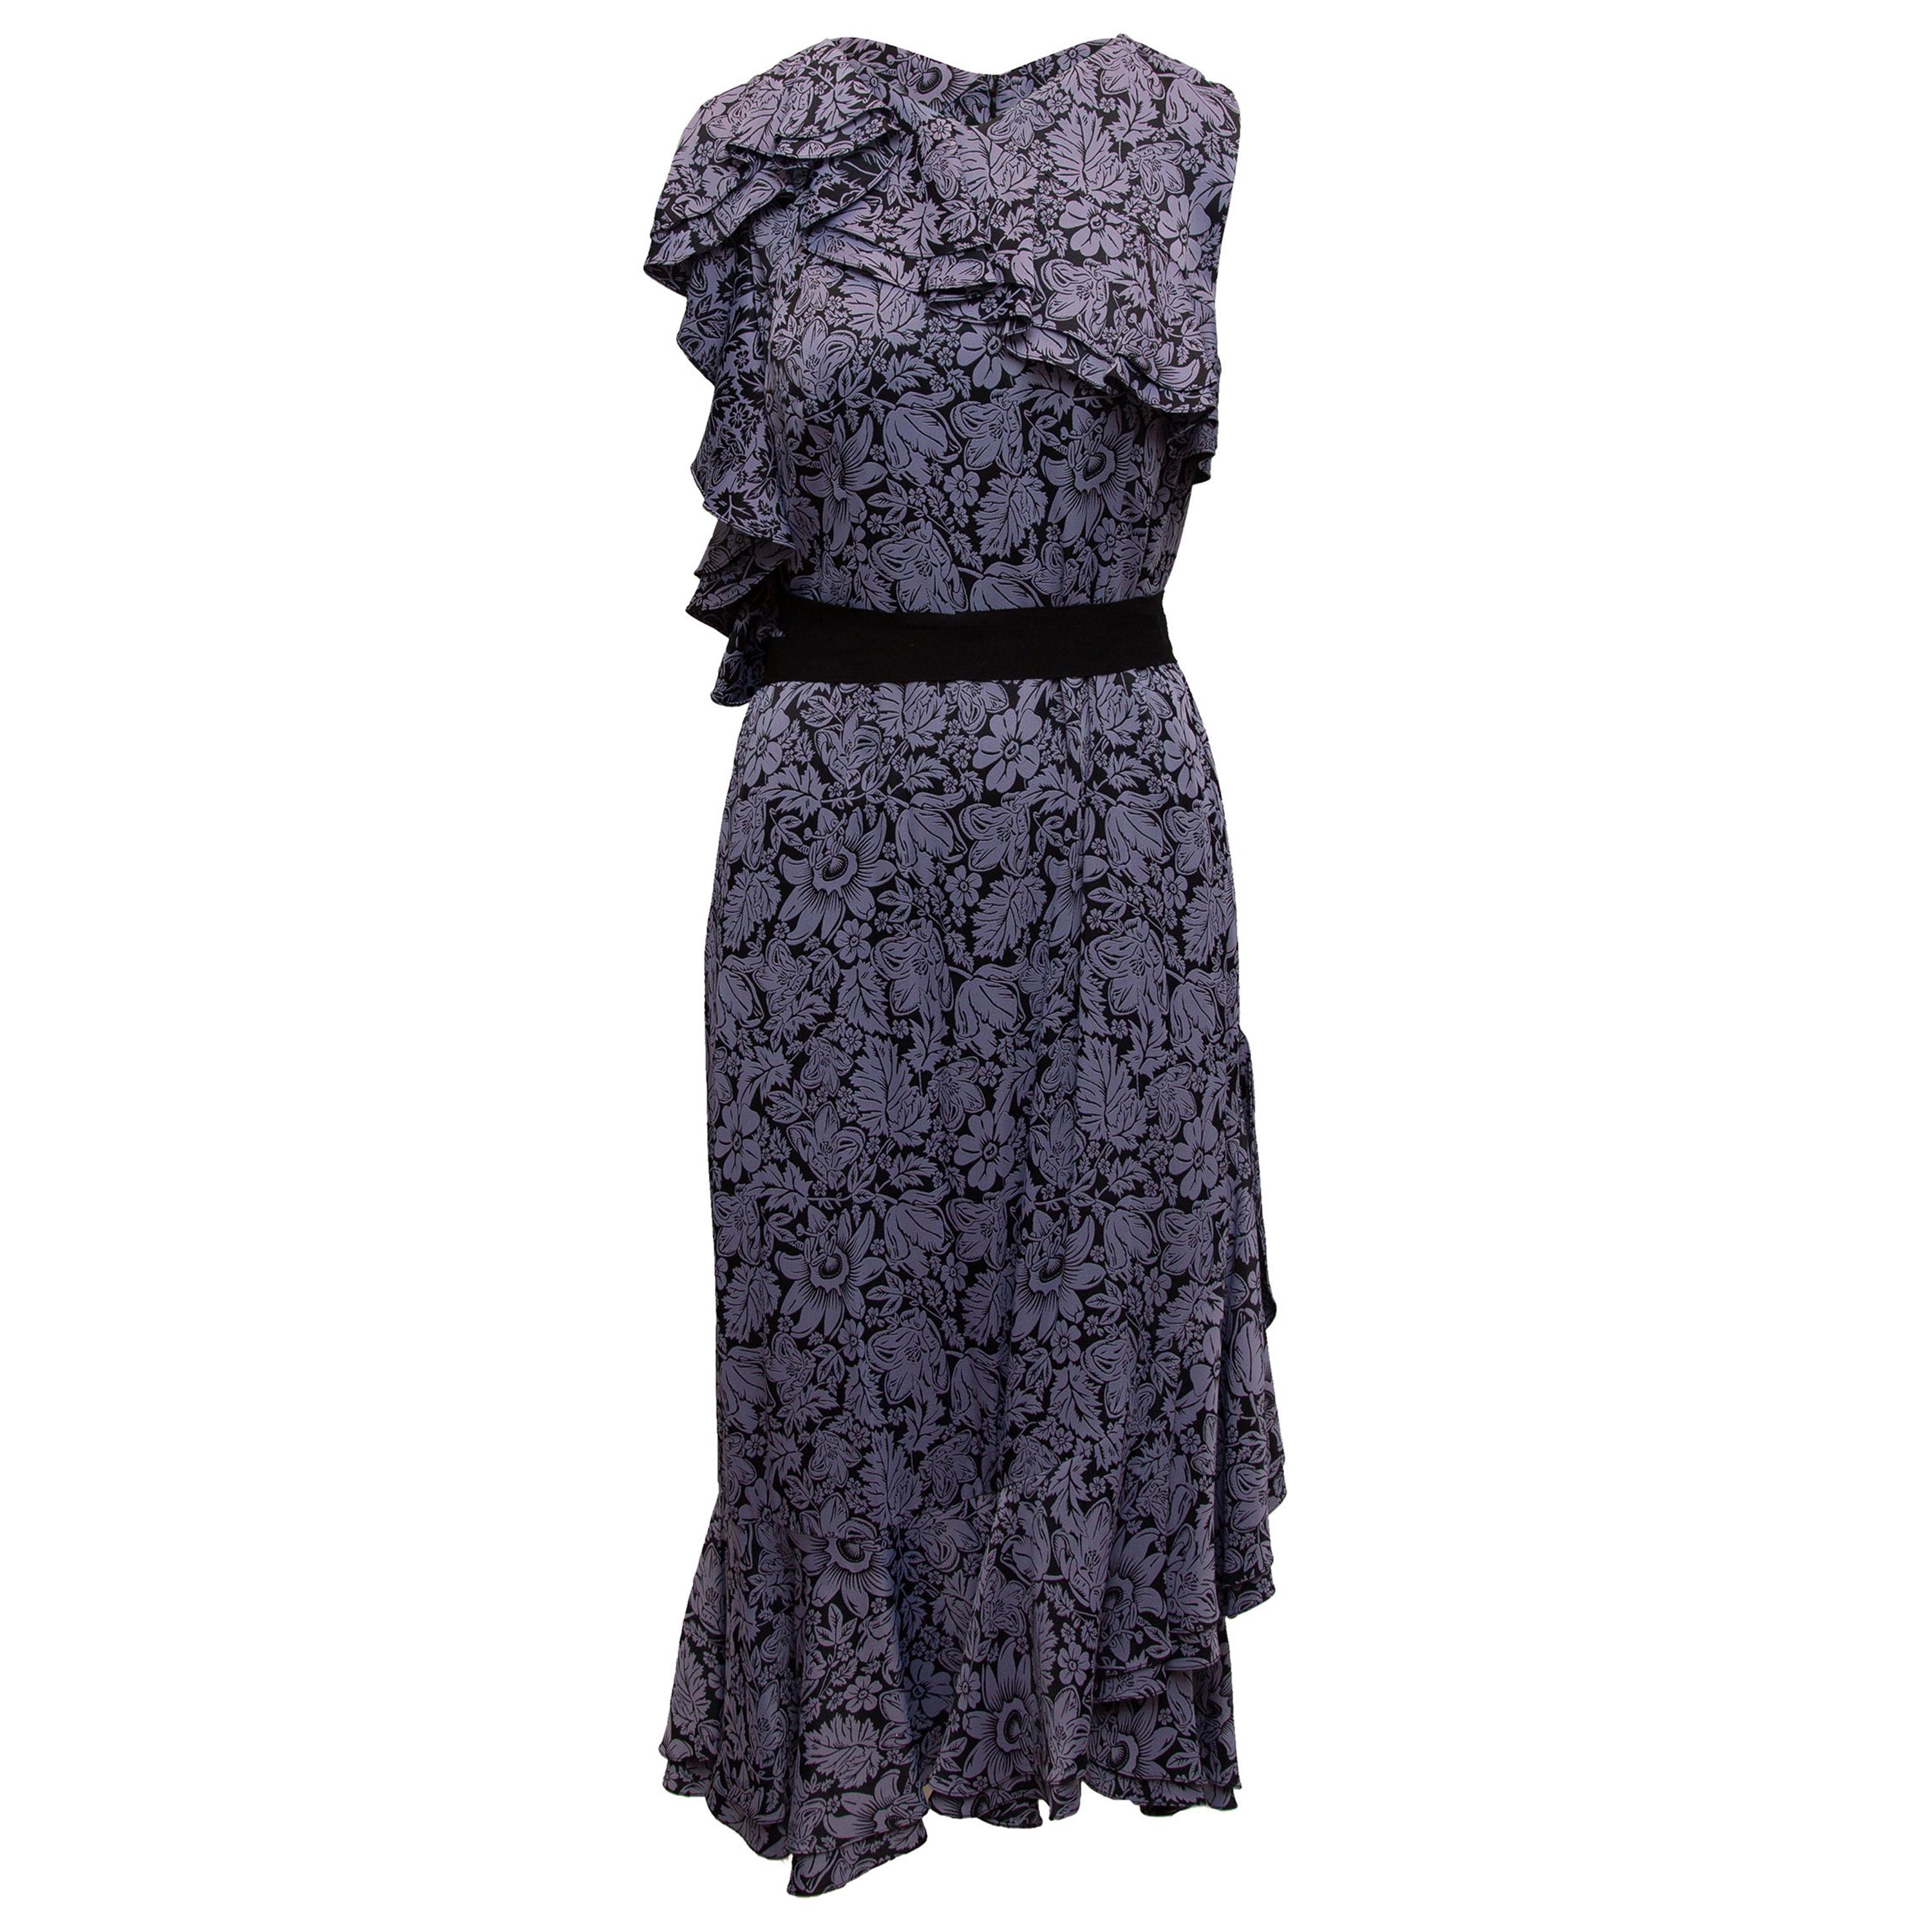 Erdem Purple & Black Kaylee Floral Patterned Dress